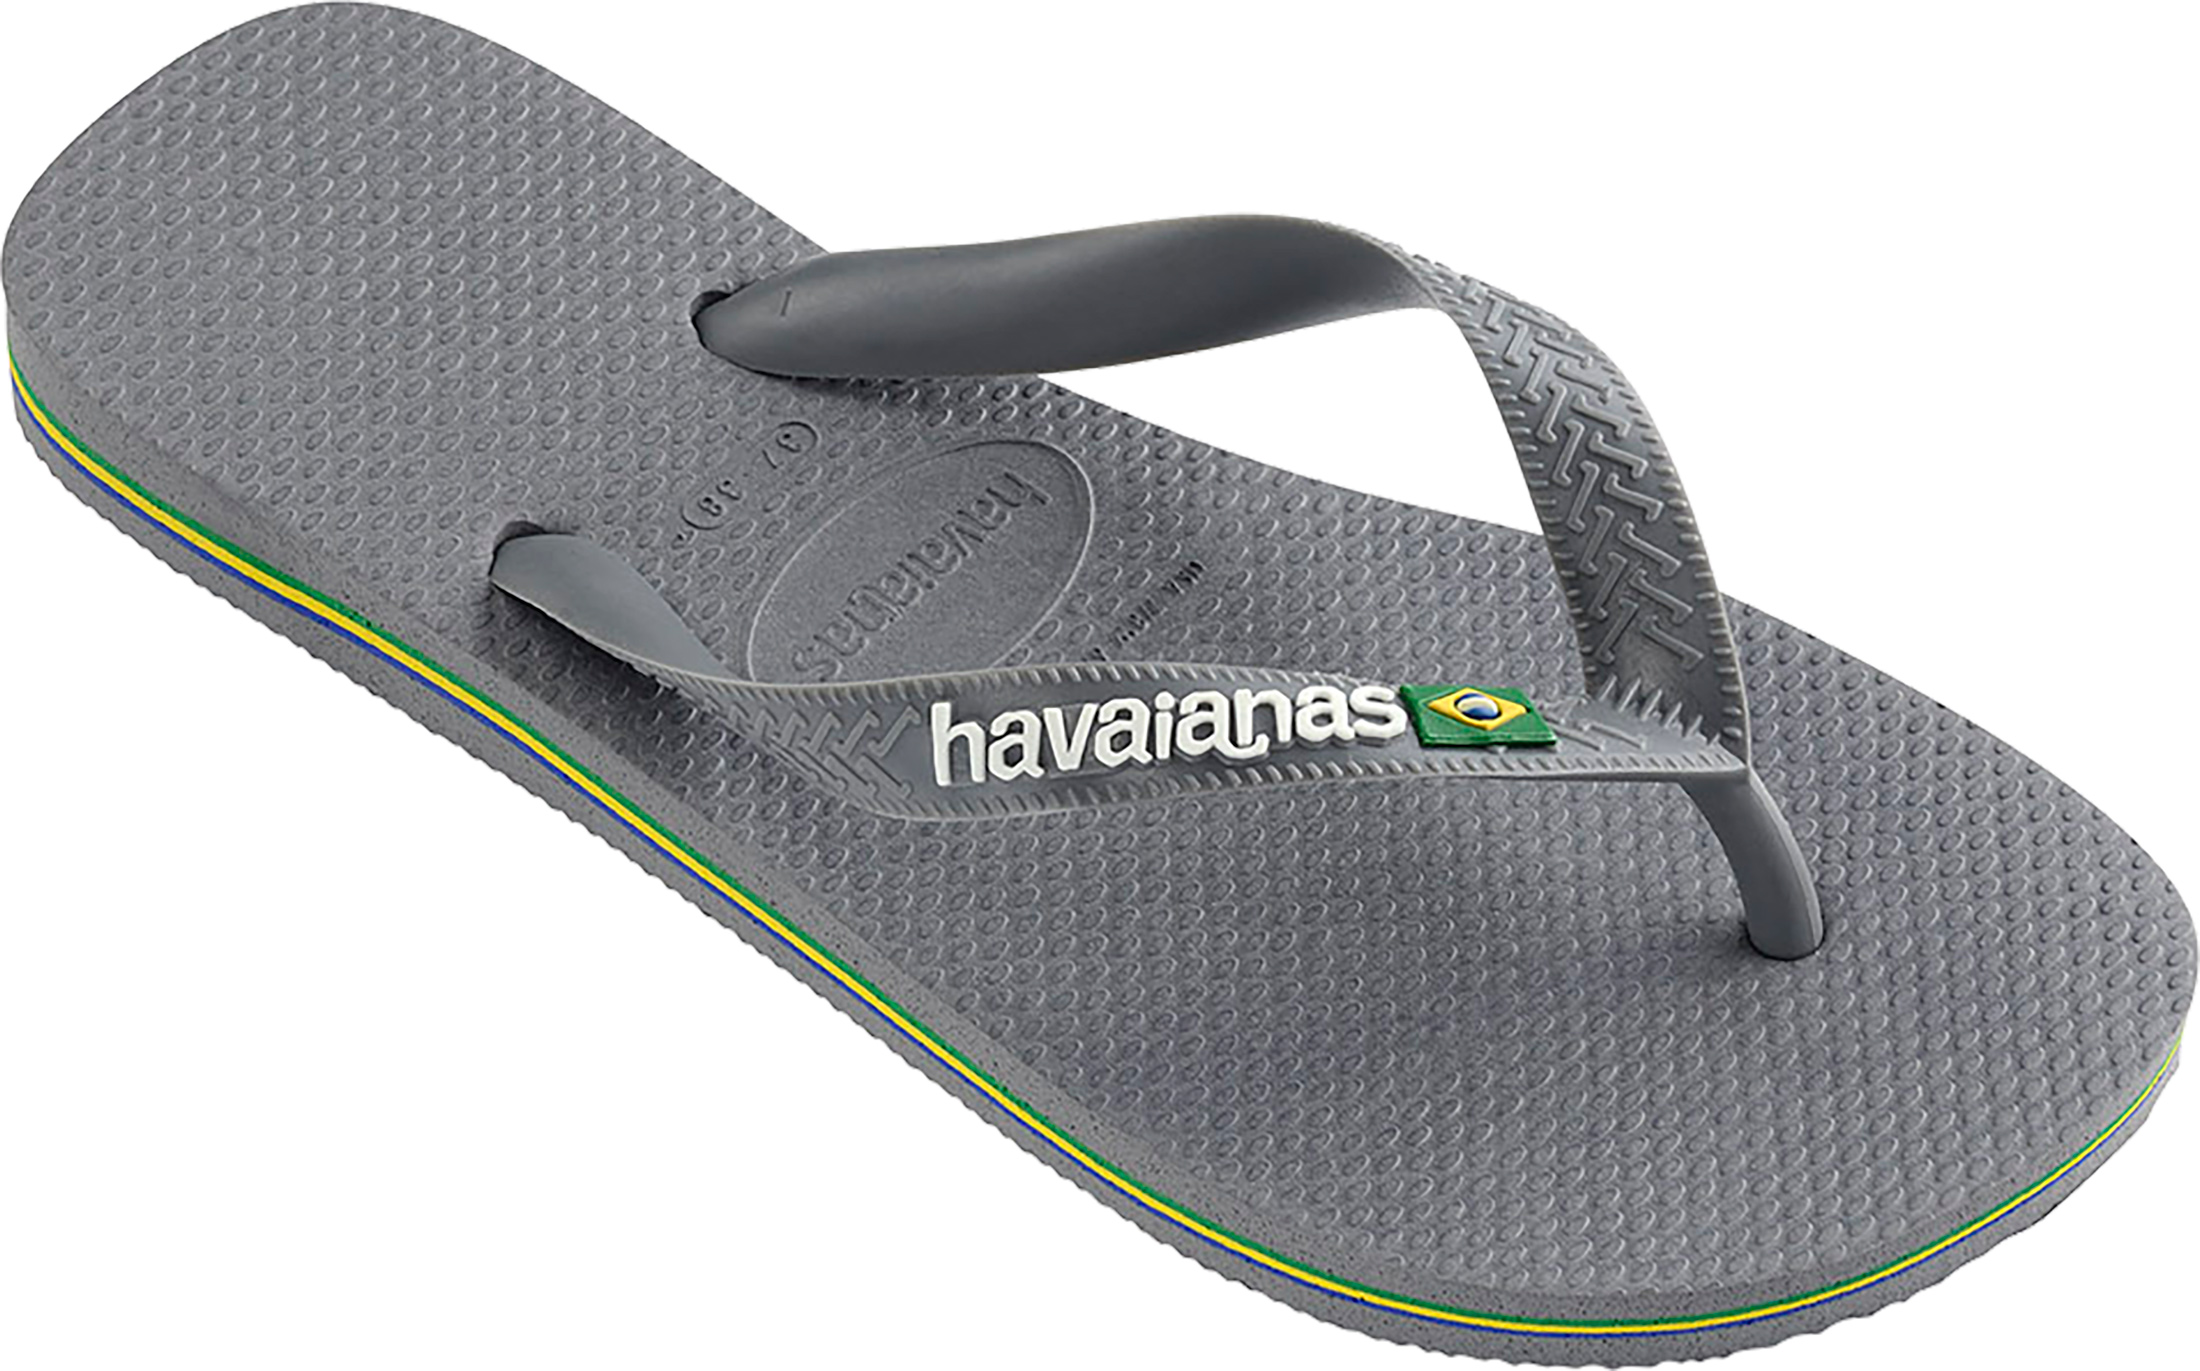 Havaianas Brasil flip flops in grey